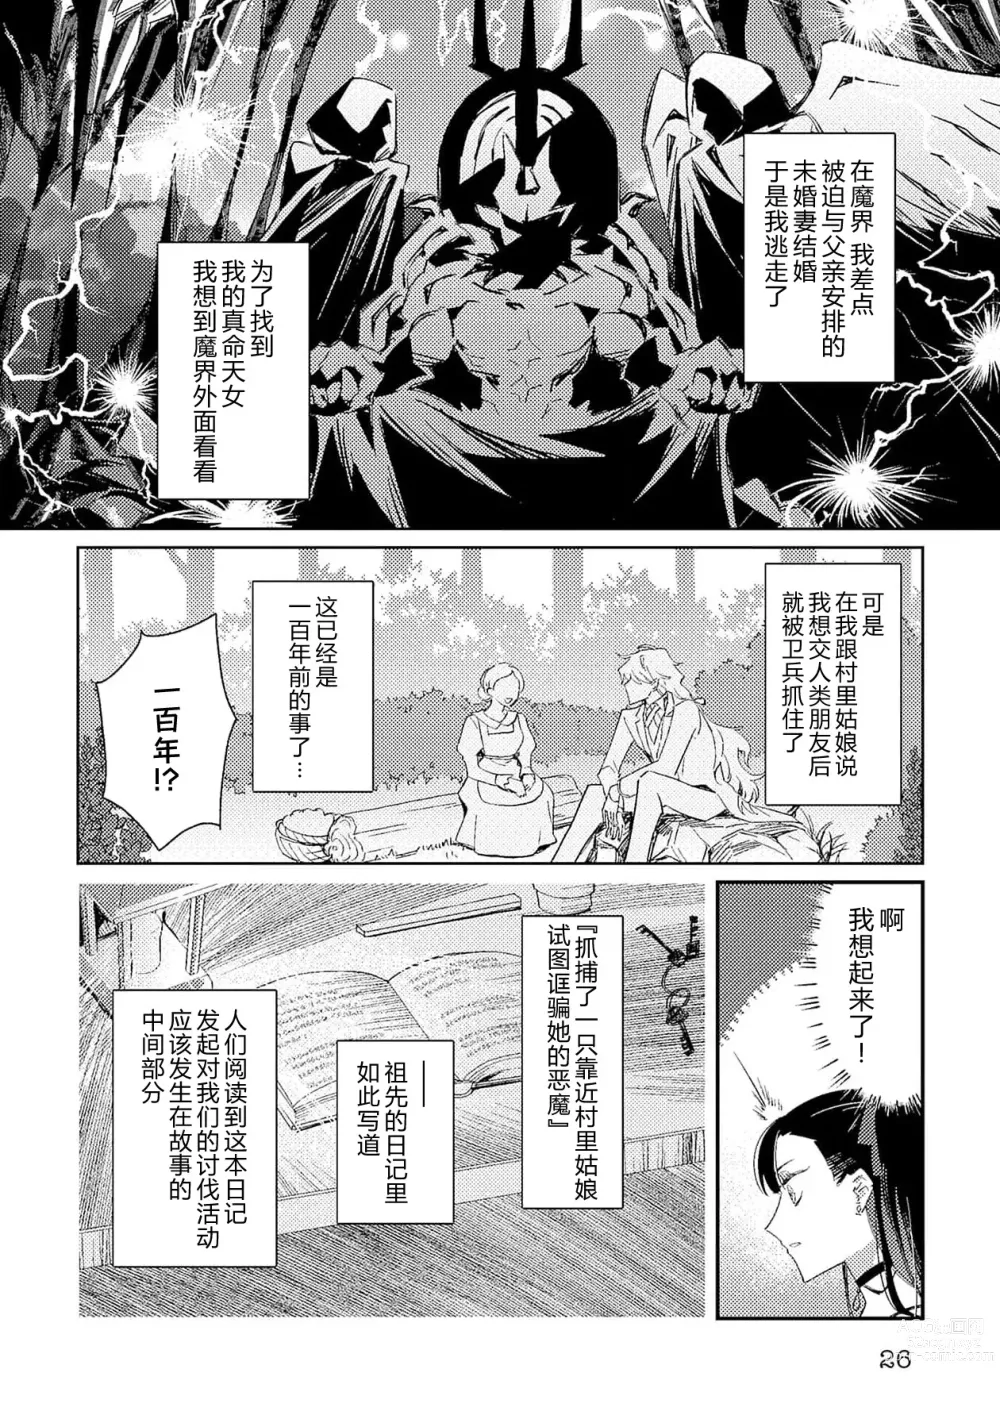 Page 26 of manga 身为恶役千金，堕落于魔界王子身下这条路线真的可以有？ 1-4